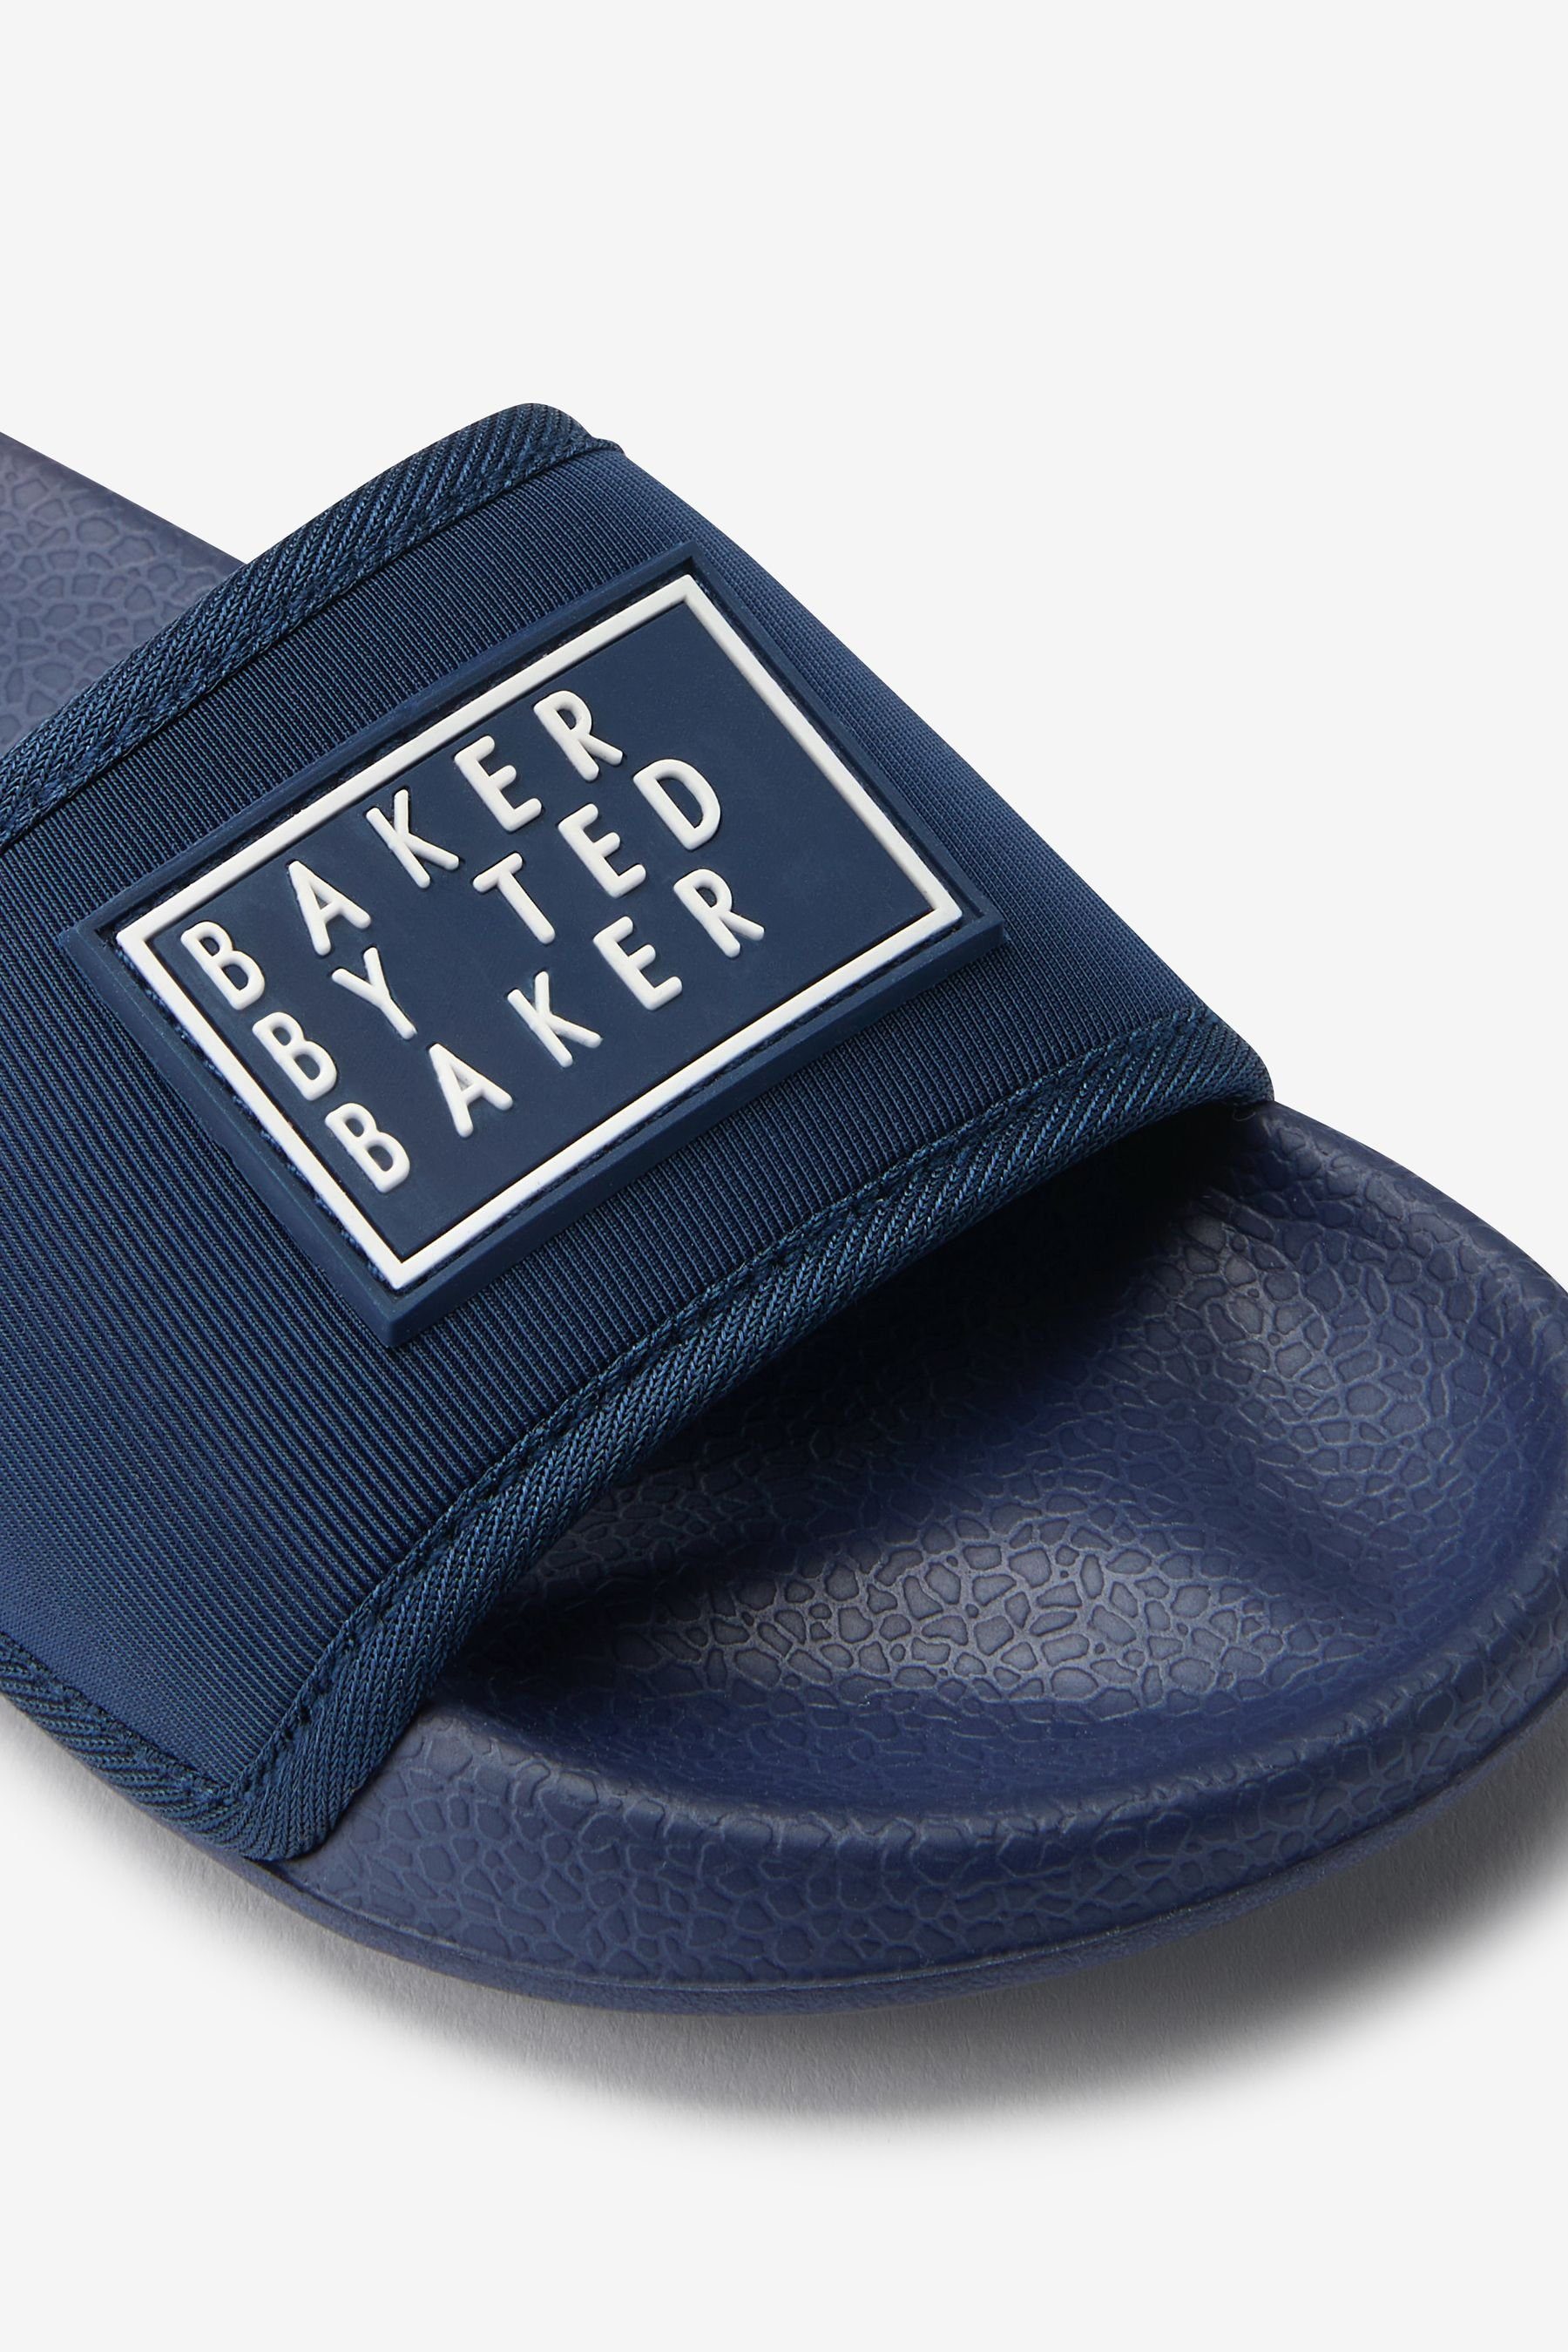 Baker (1-tlg) by Baker Ted by Pantoletten Ted Baker Baker Pantolette